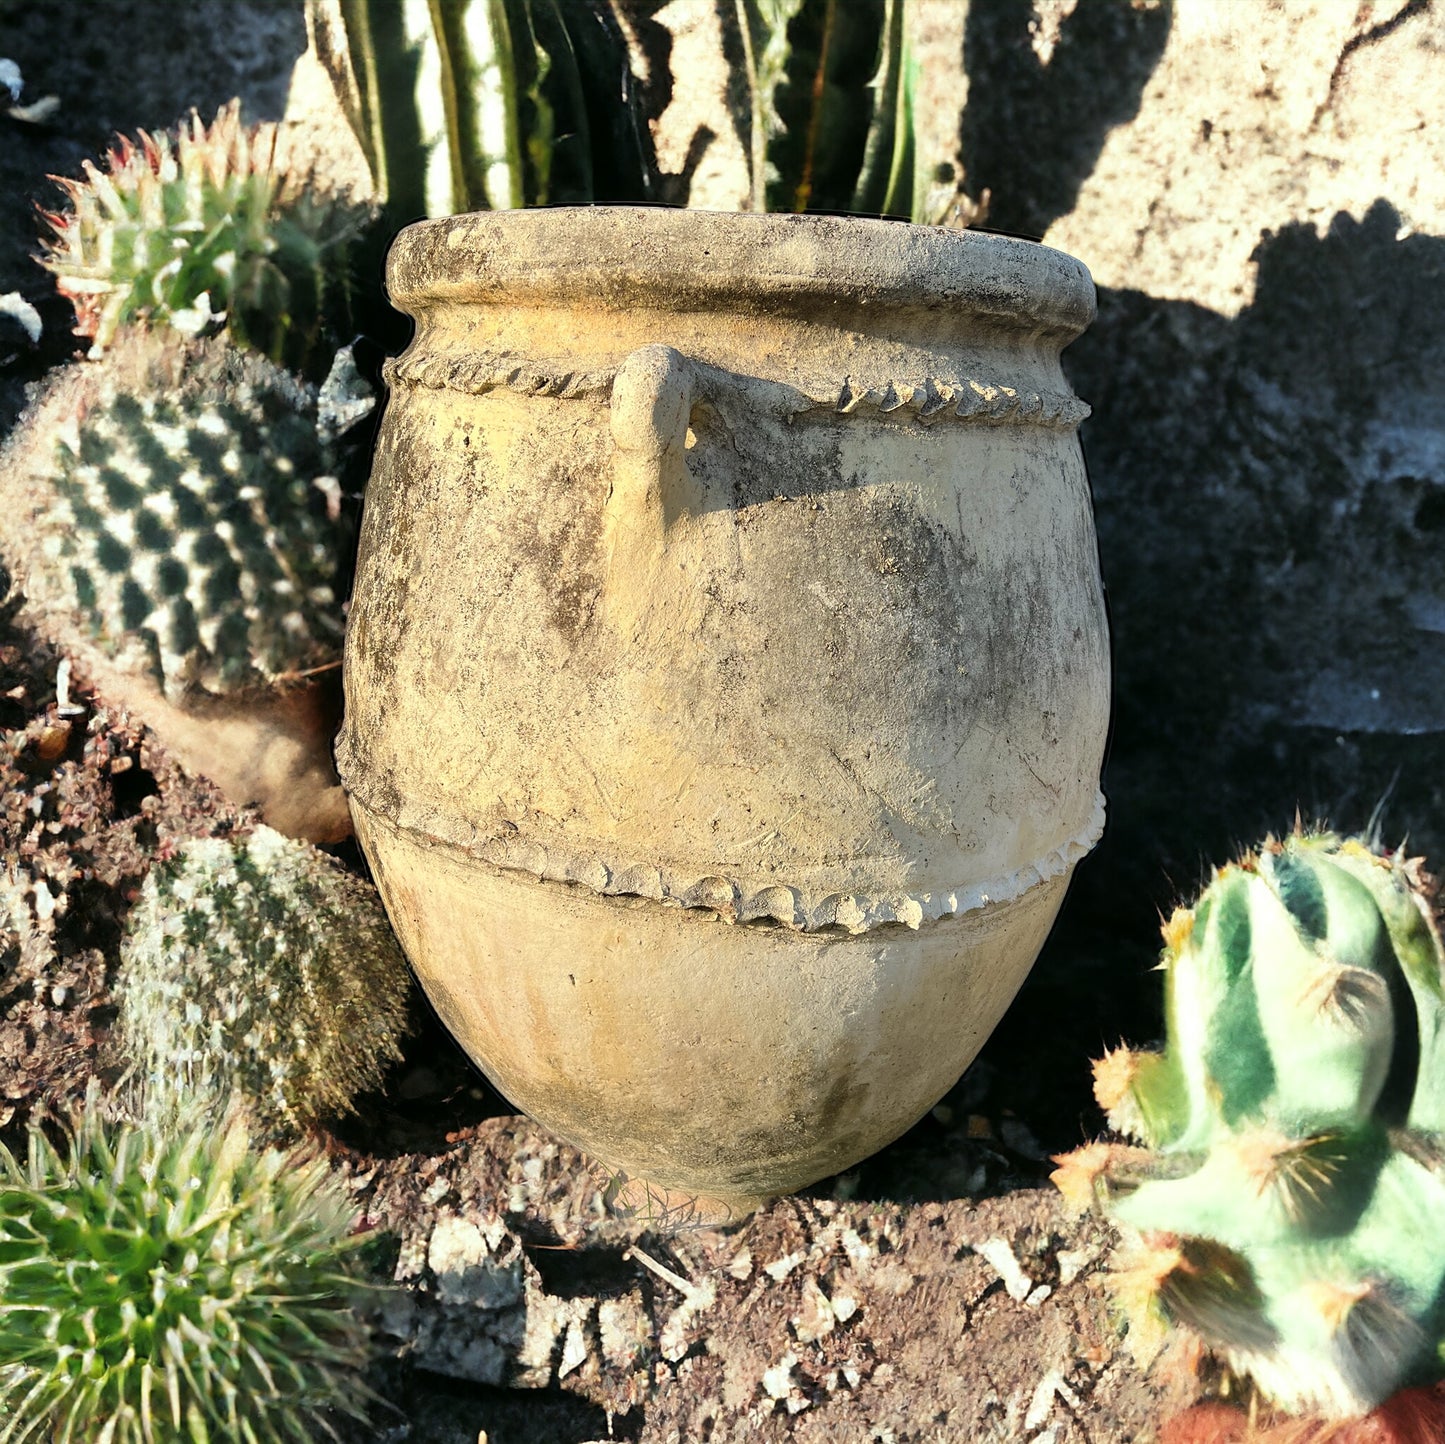 Moroccan clay pot